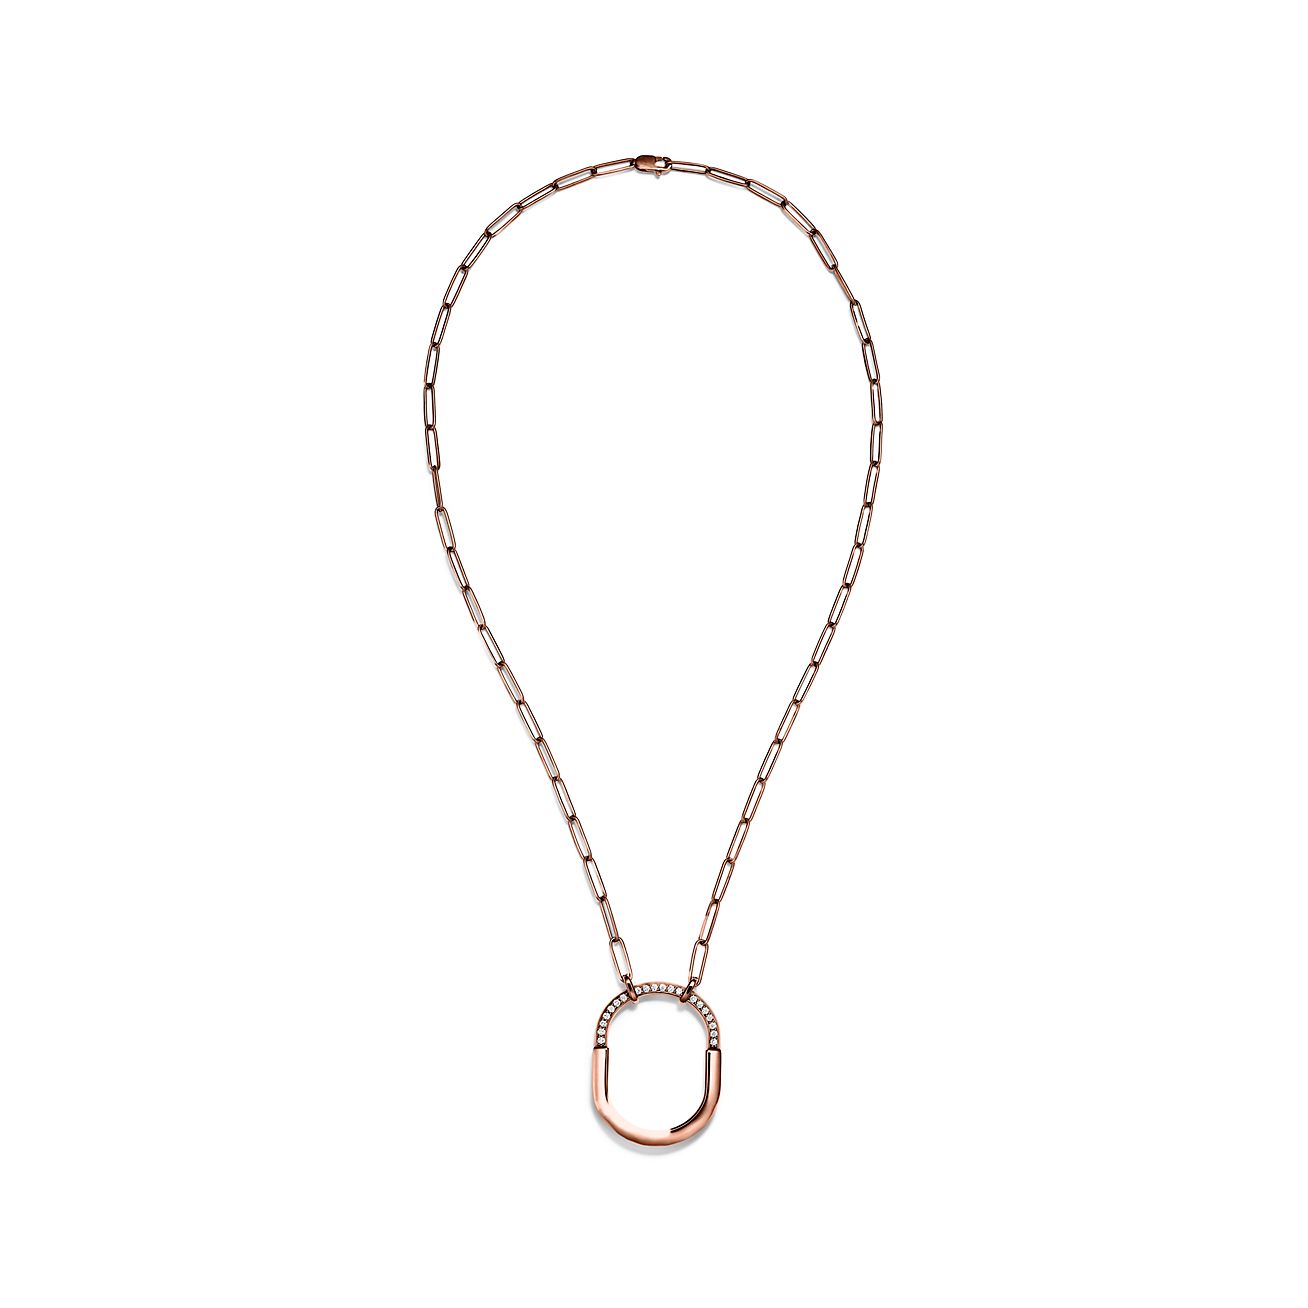 Tiffany Lock Pendant in Rose Gold, Medium